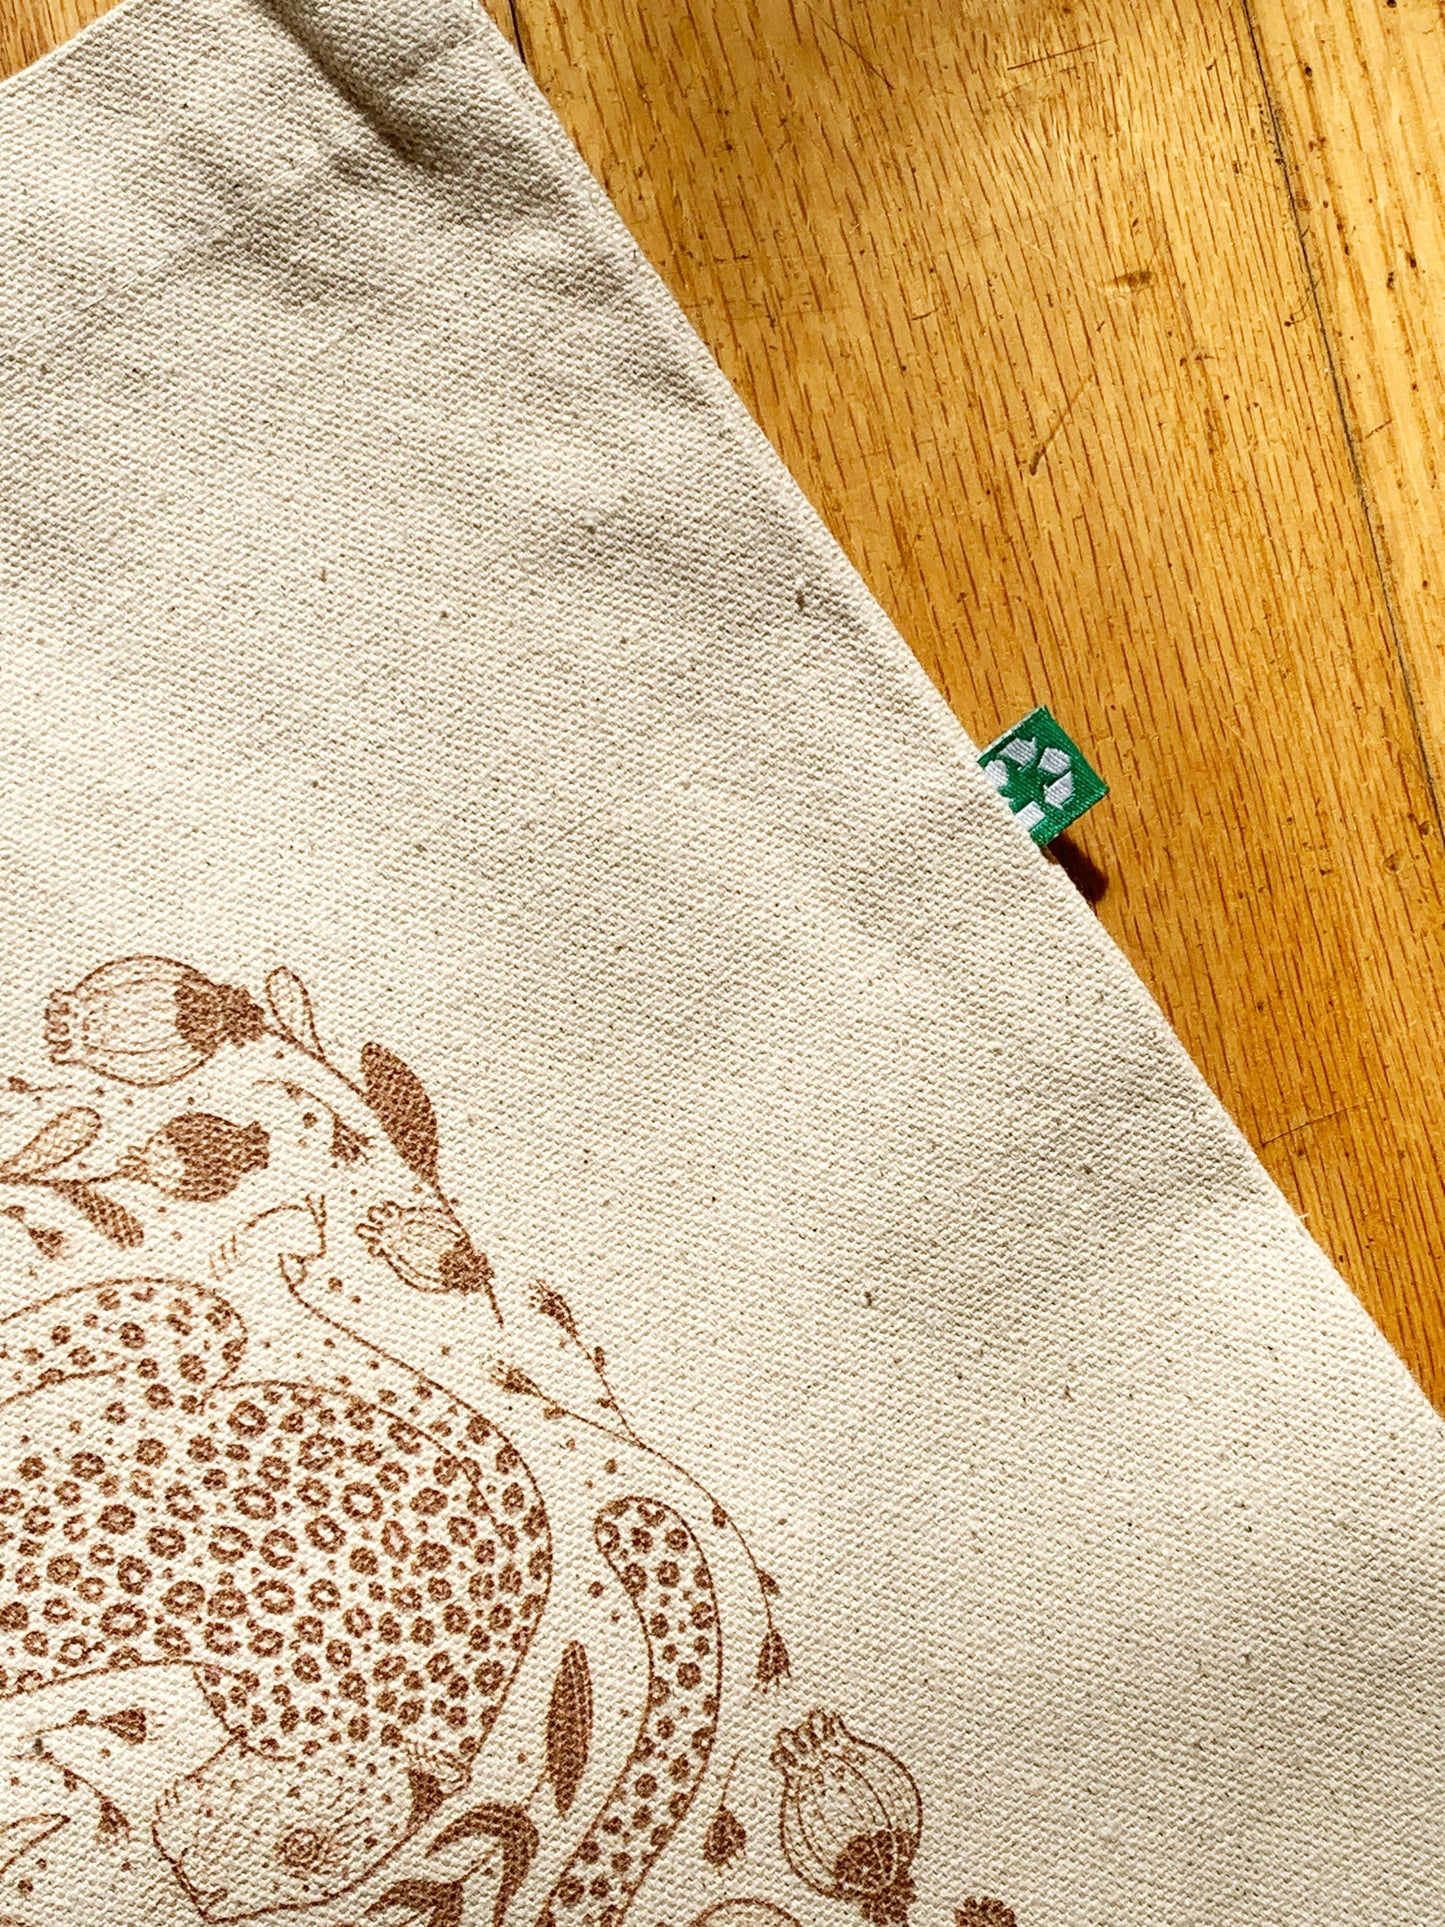 Leopard tote bag + Bandana Gift set (Gold)